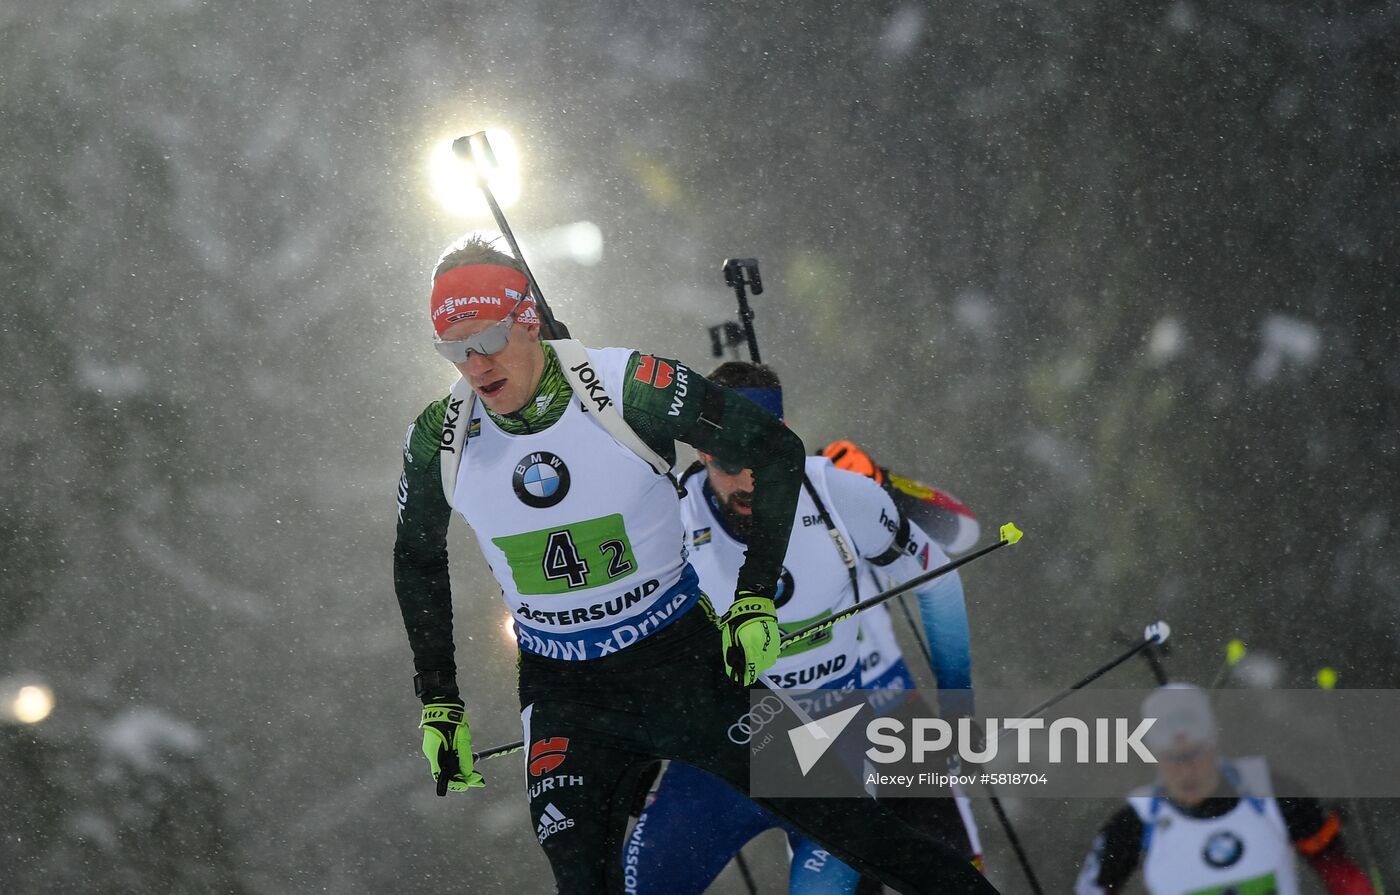 Sweden Biathlon Worlds Men Relay